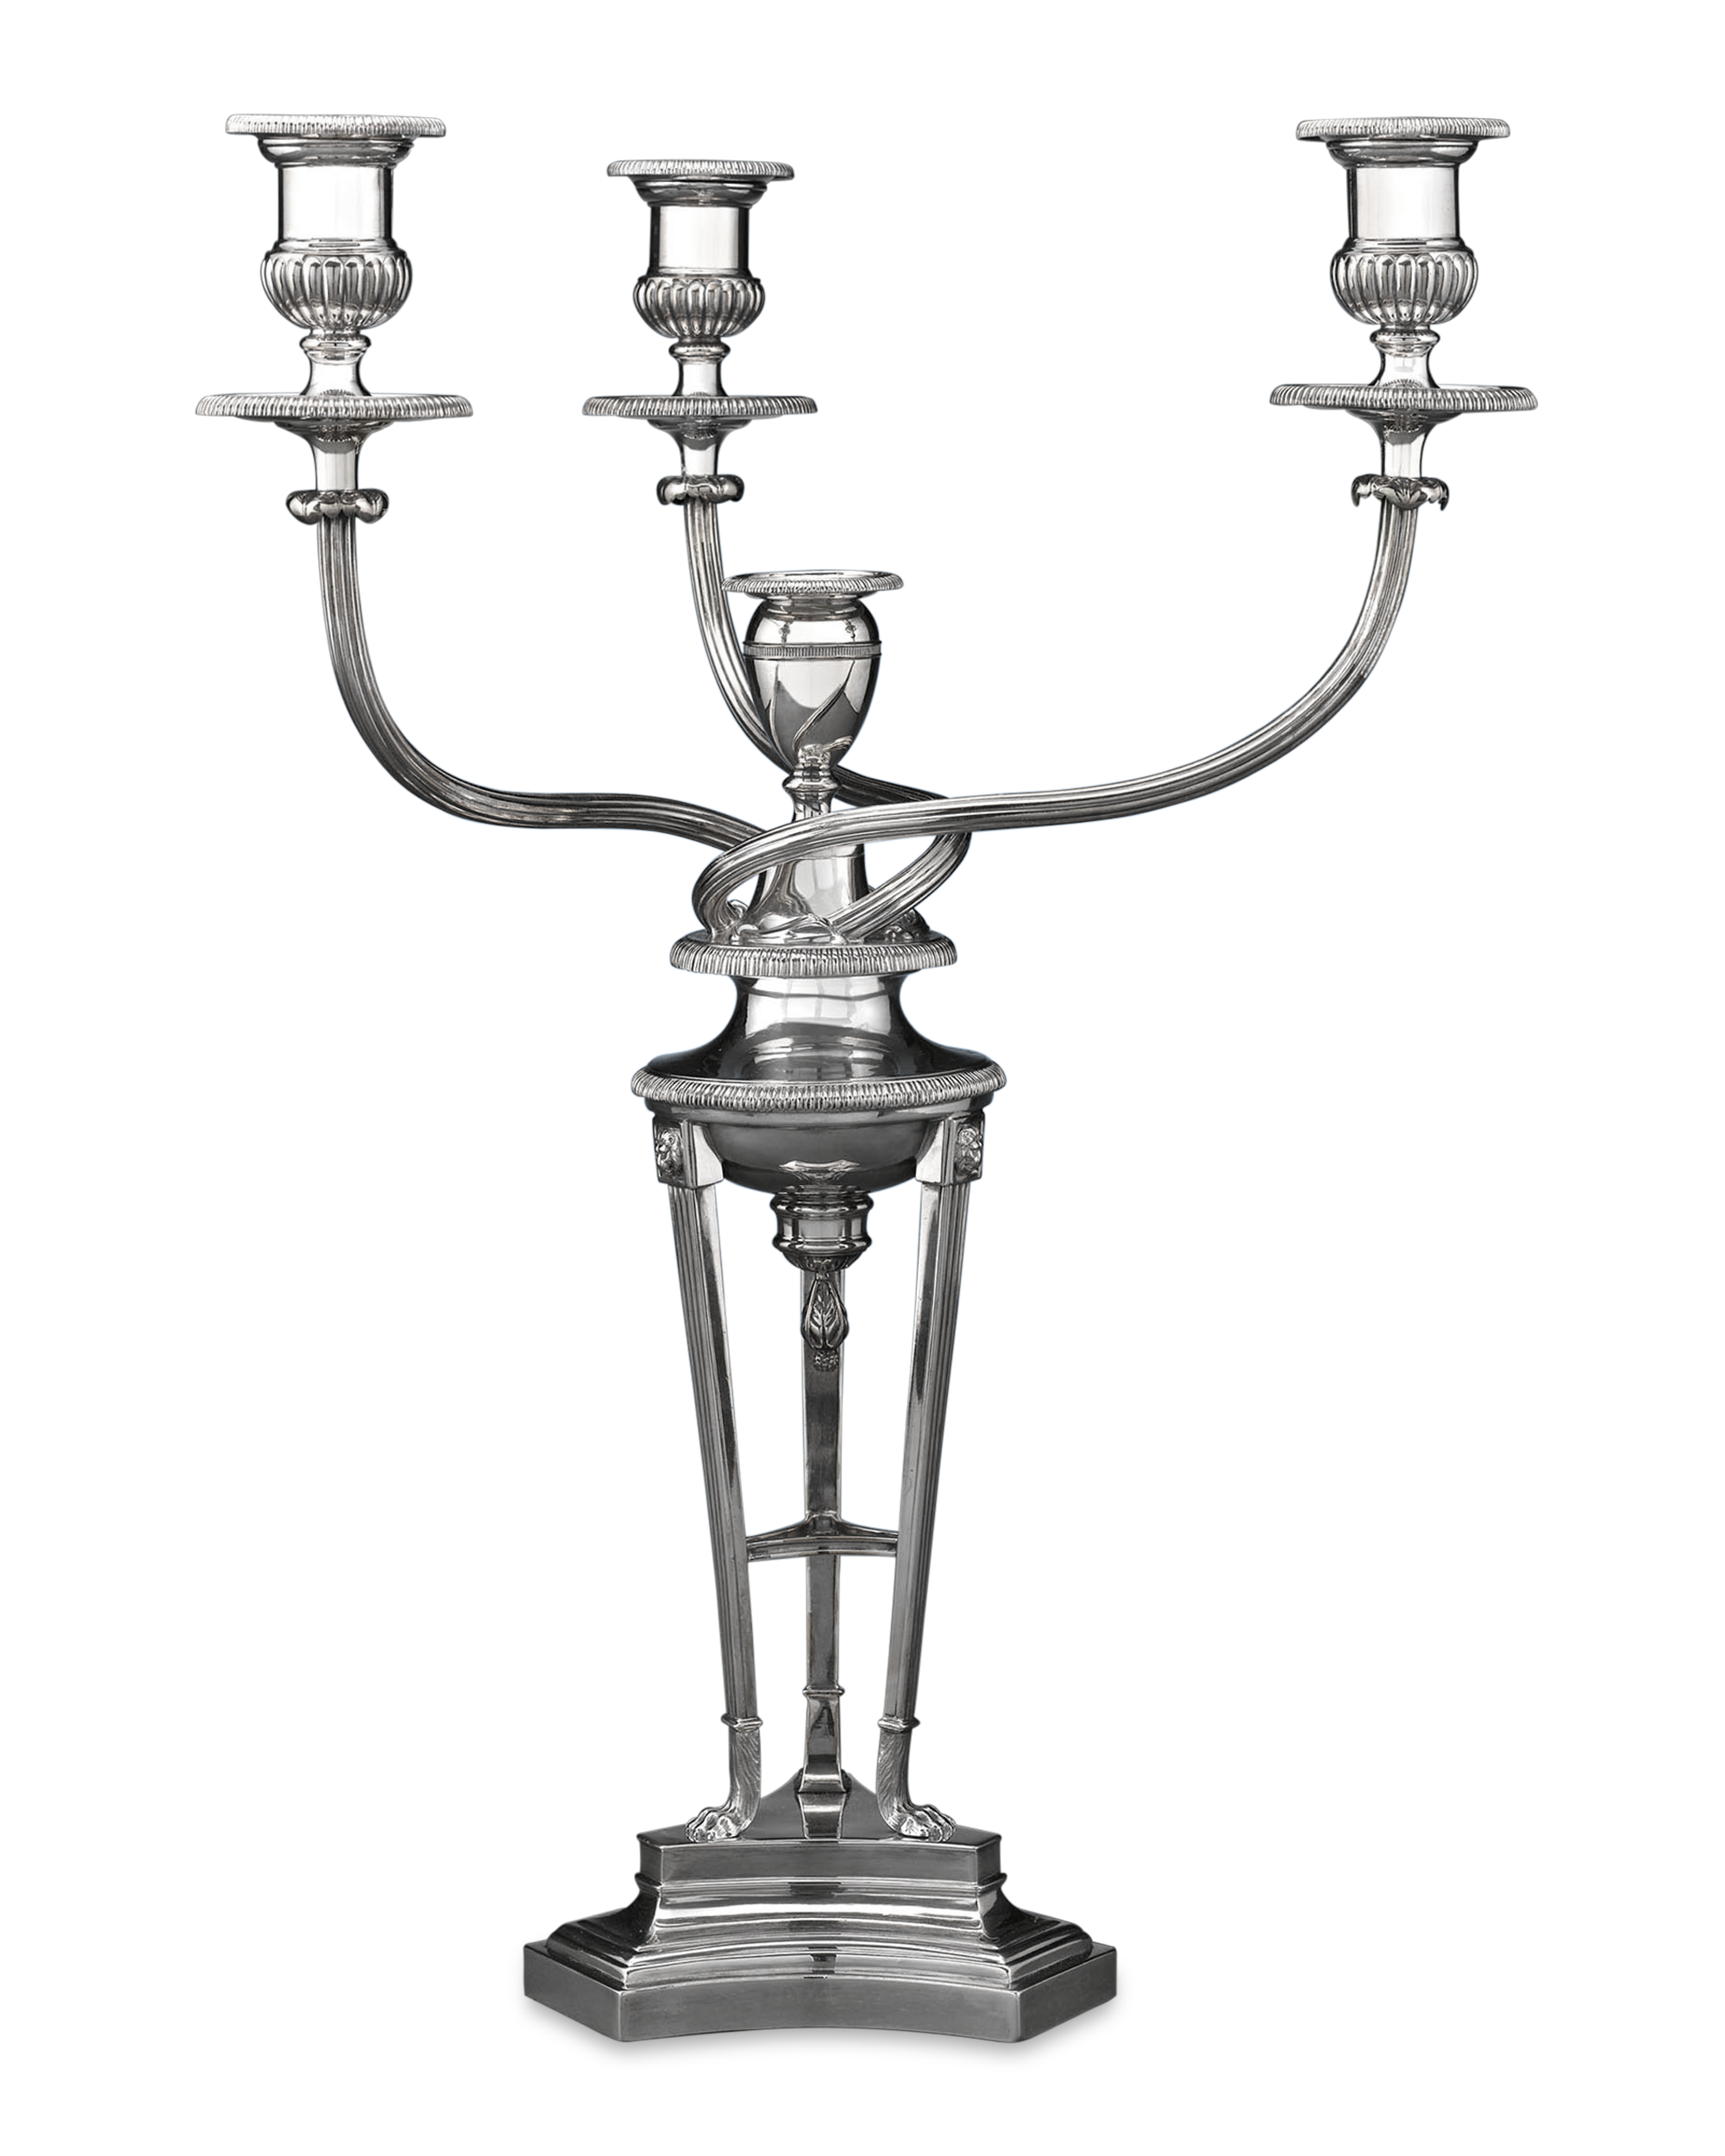 This wonderful candelabrum was created by English silversmith Matthew Boulton